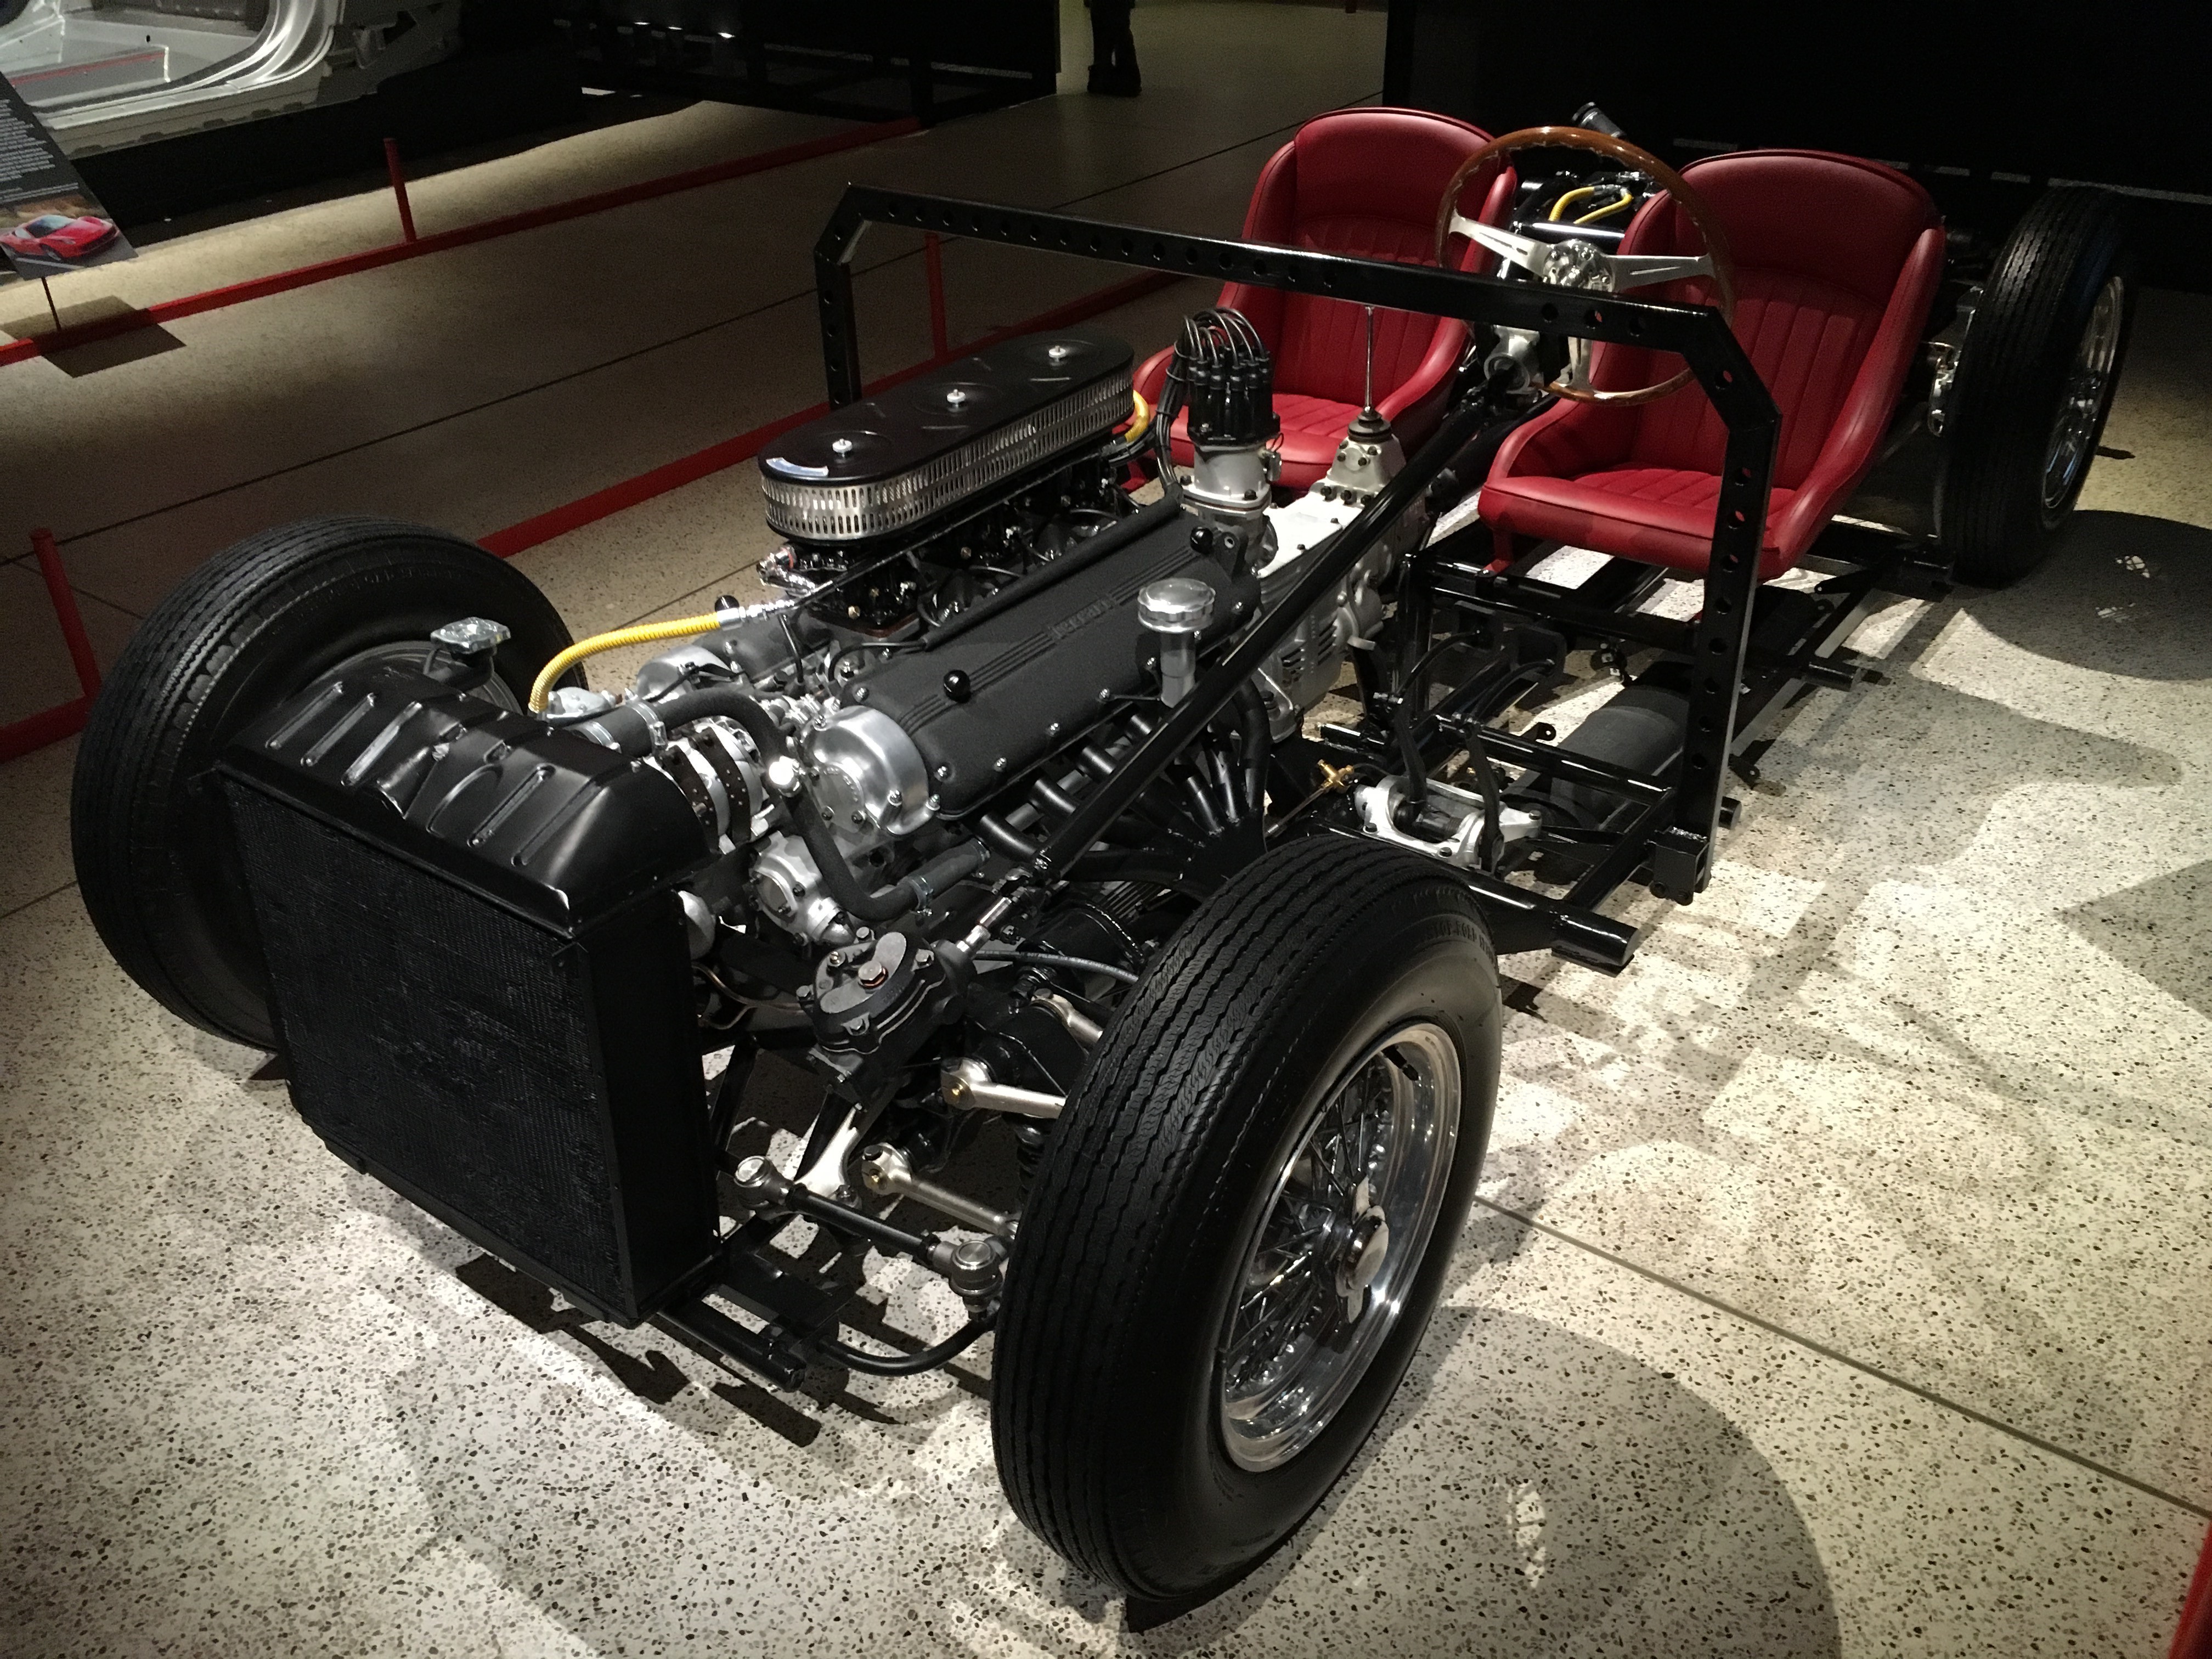 Ferrari-exhib-50s-chassis-2.jpg#asset:2591